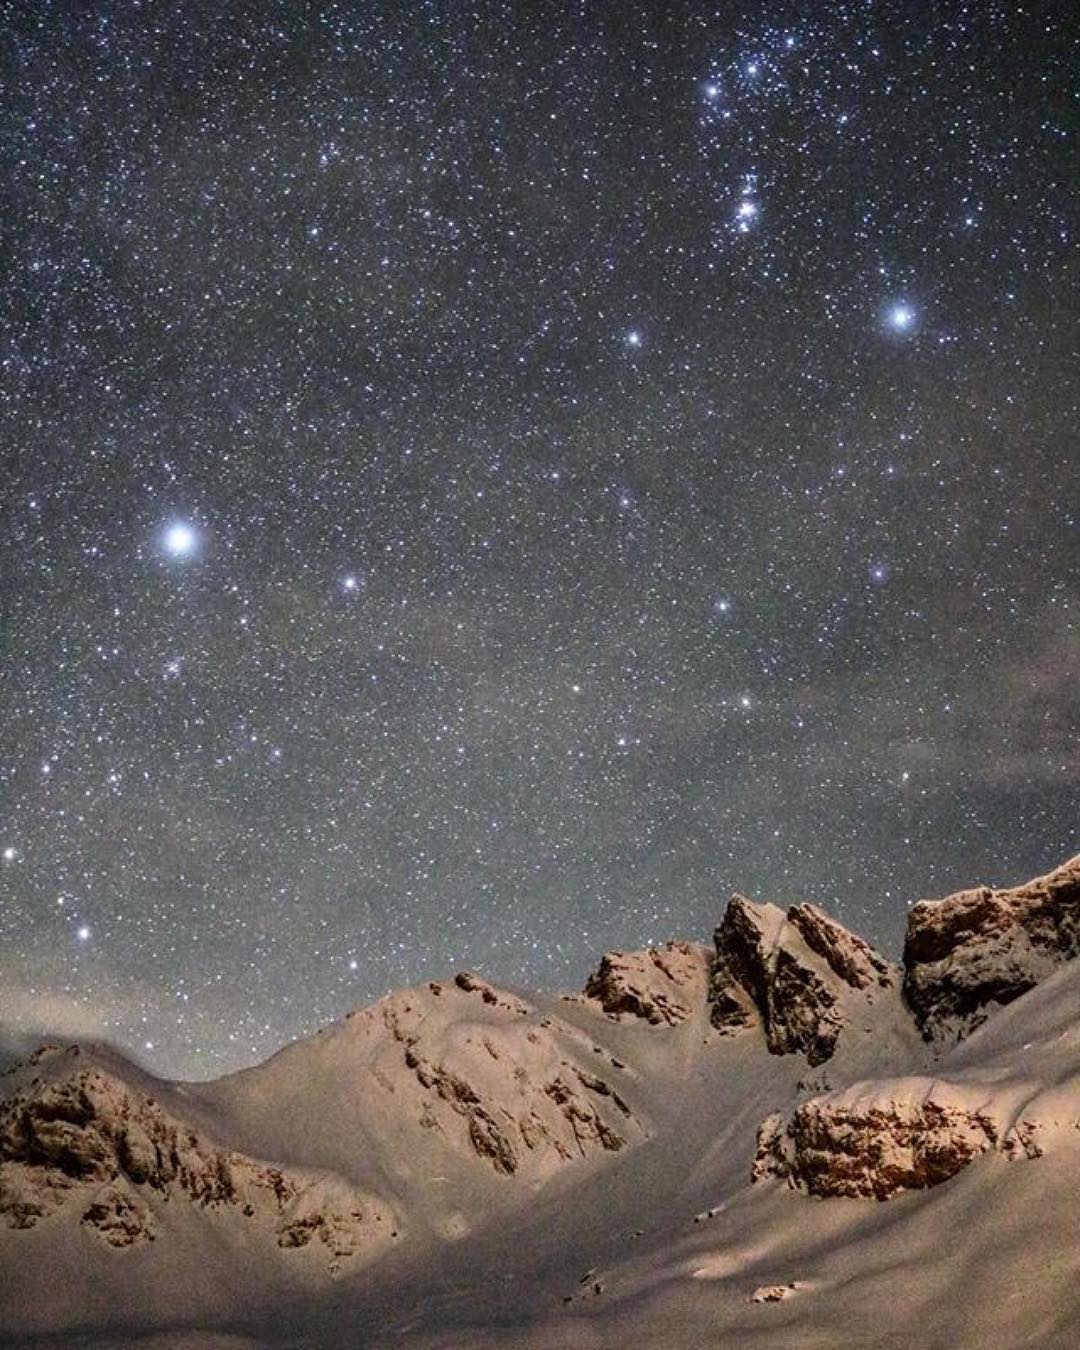 ❤️ #Repost @lspichtigthe night sky up here @melchseefrutt is magical ✨#night #sky #stars #melchseefrutt